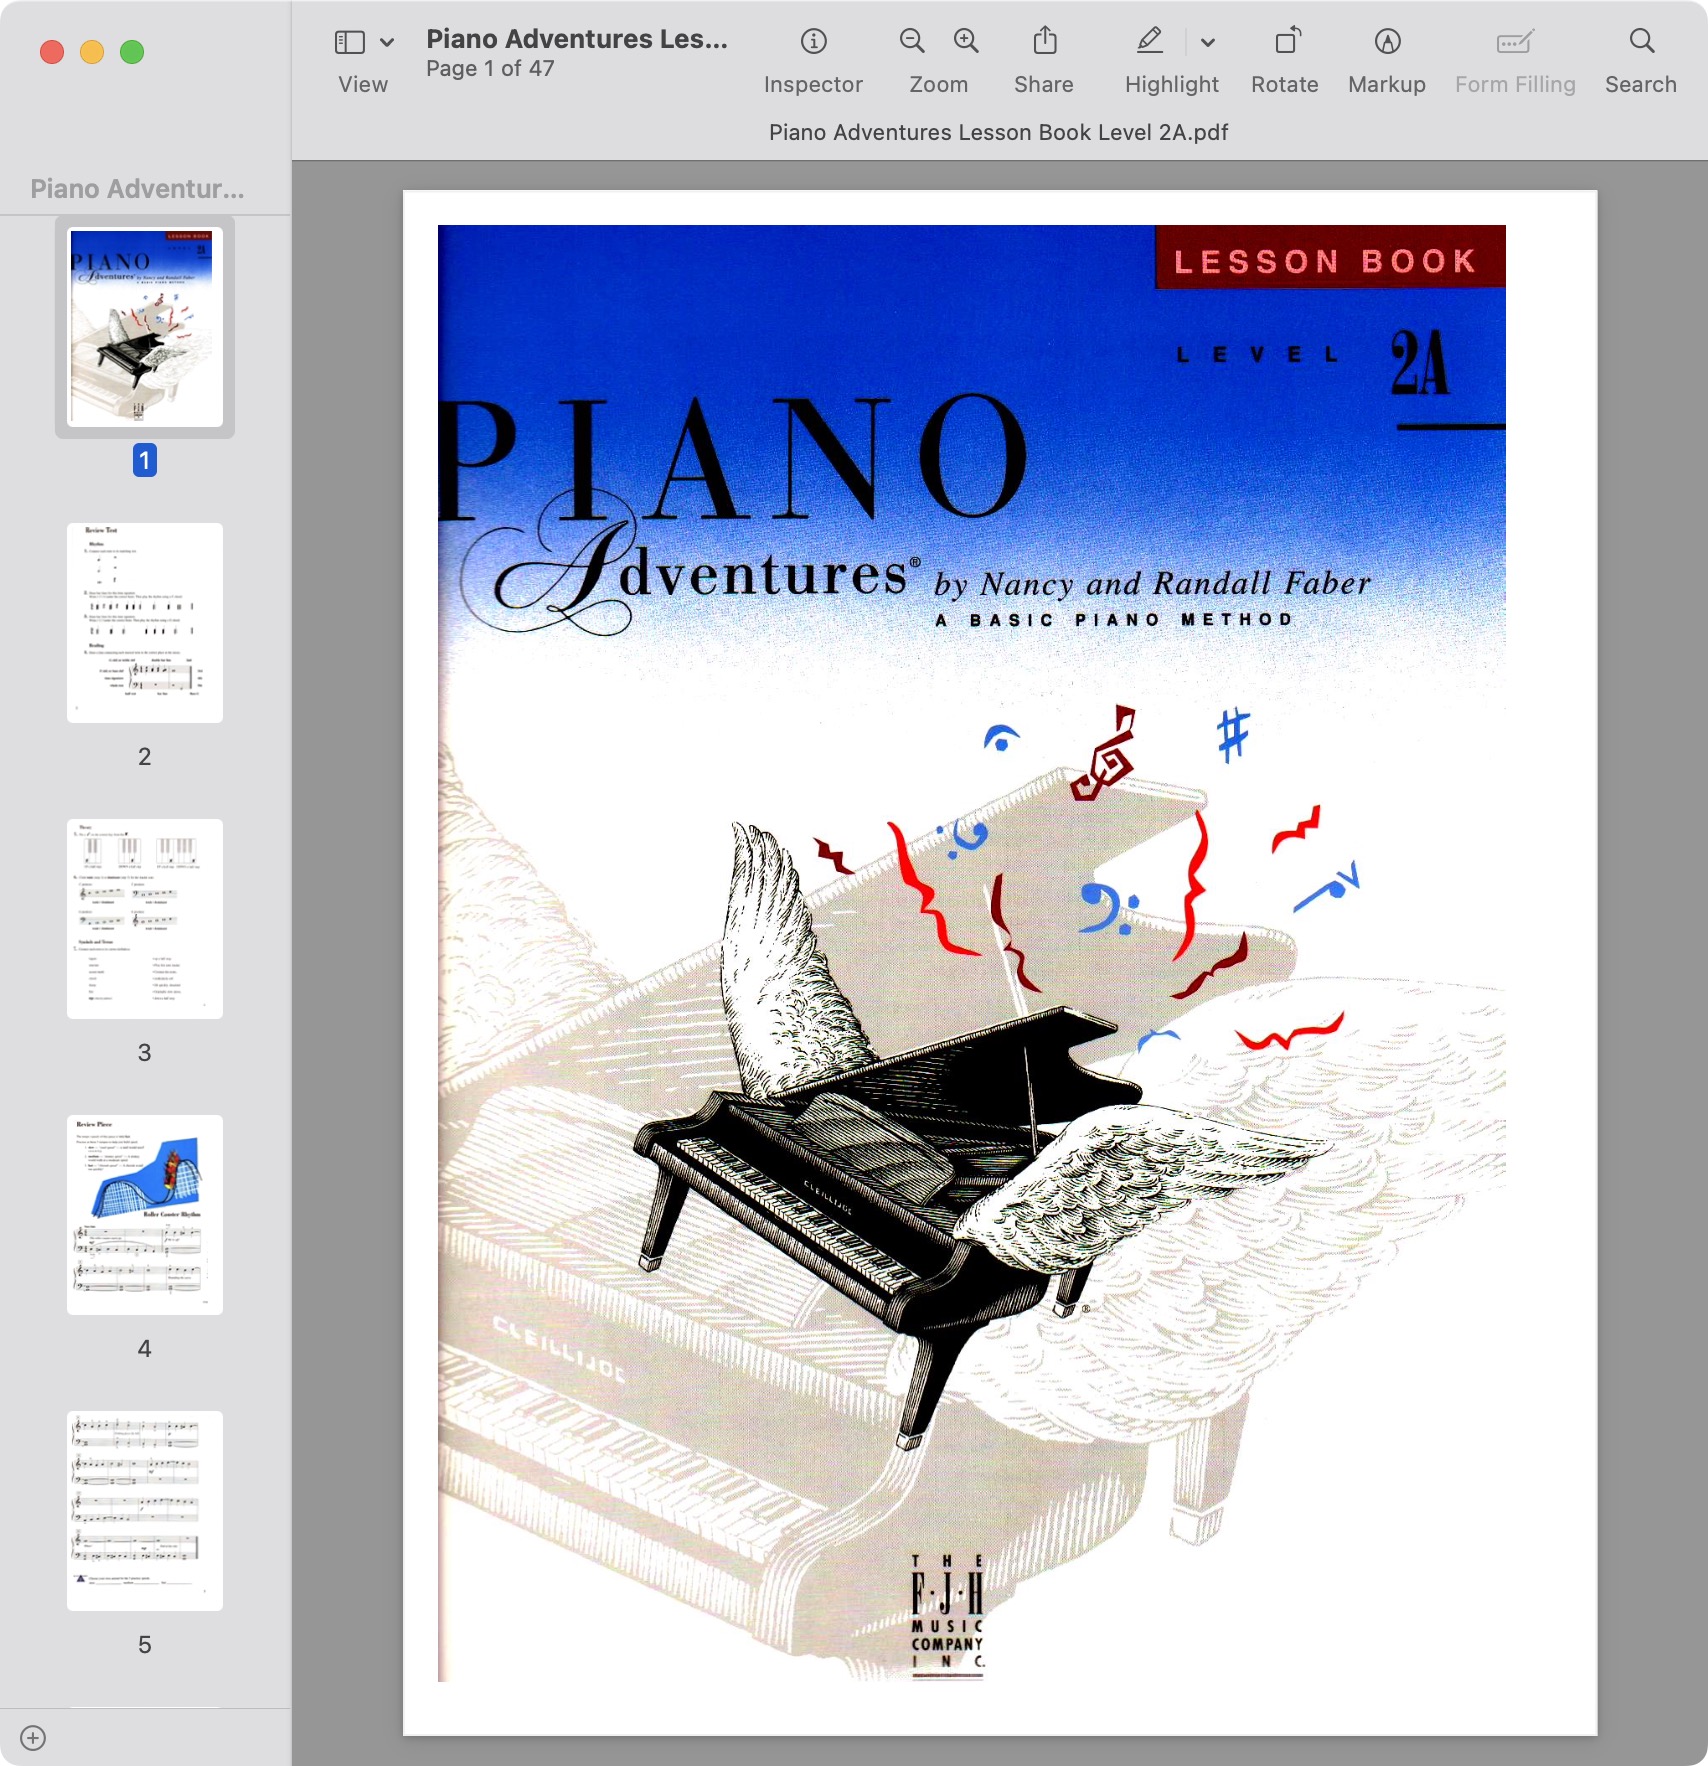 Piano Adventures Lesson Book Level 2A.jpg